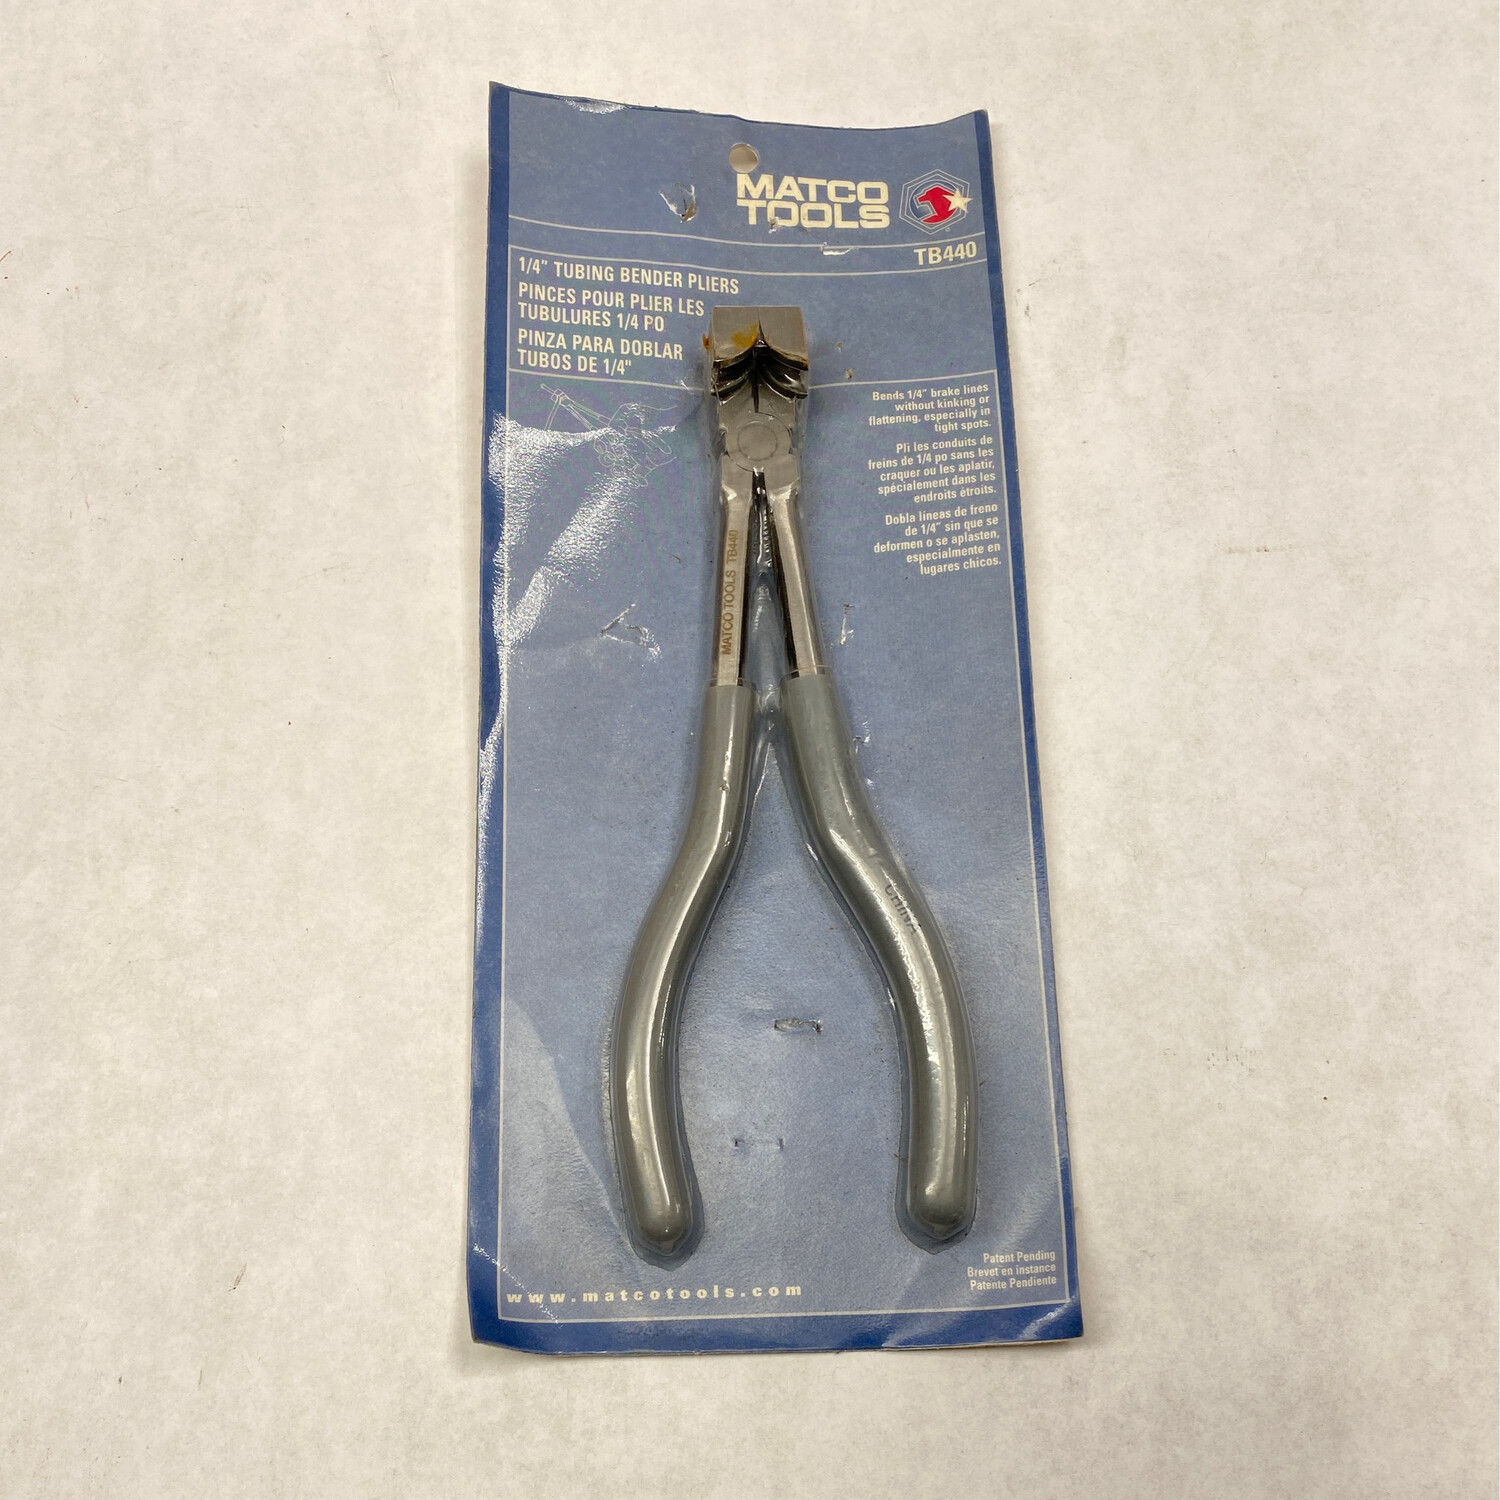 Matco Tools 1/4” Tubing Bender Pliers, TB440